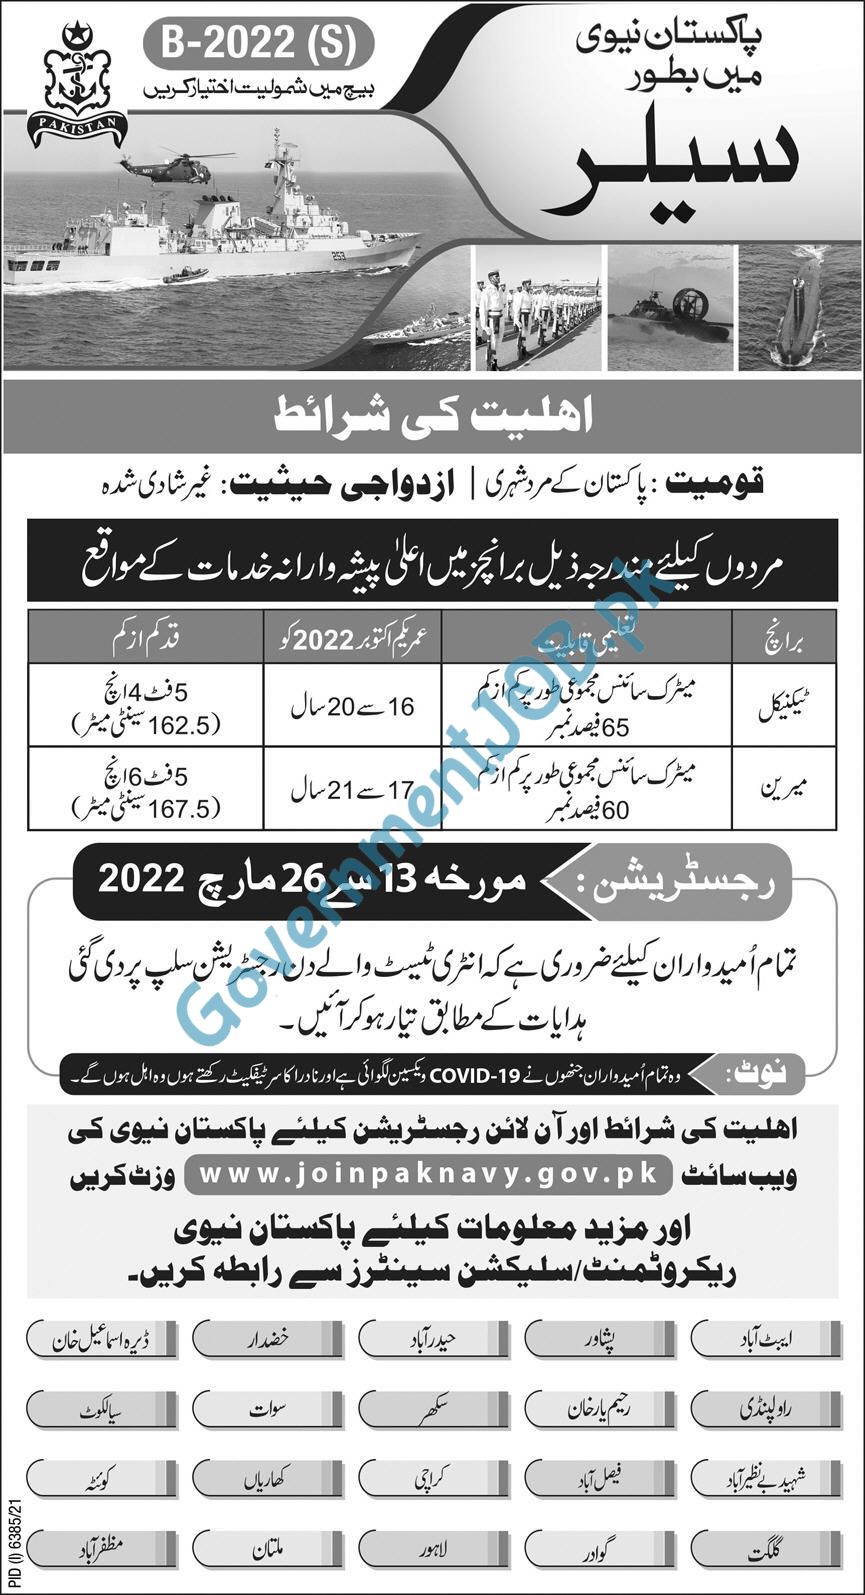 Pak Navy Matric Jobs 2022 | joinpaknavy.gov.pk